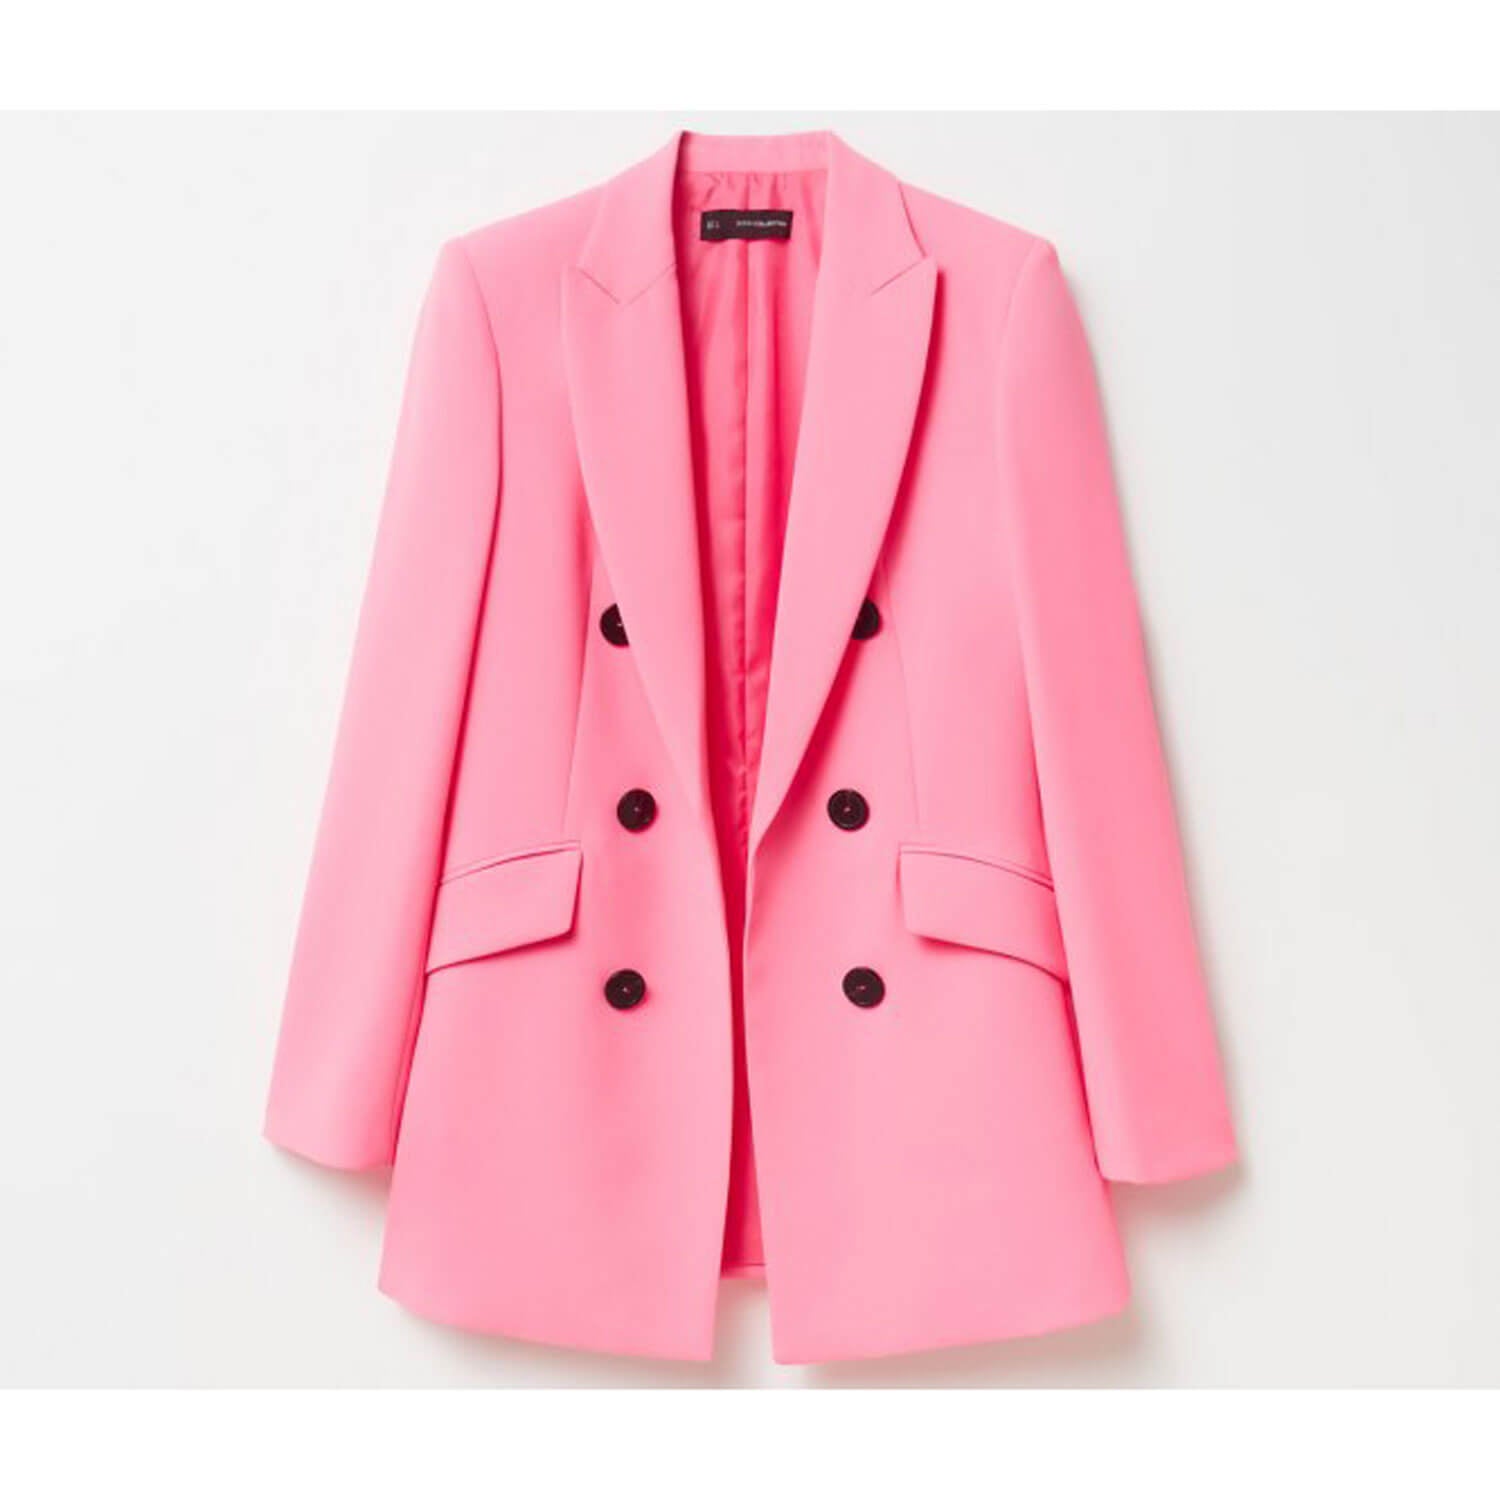 Sfera Lapel collar jacket - Pink 1 Shaws Department Stores